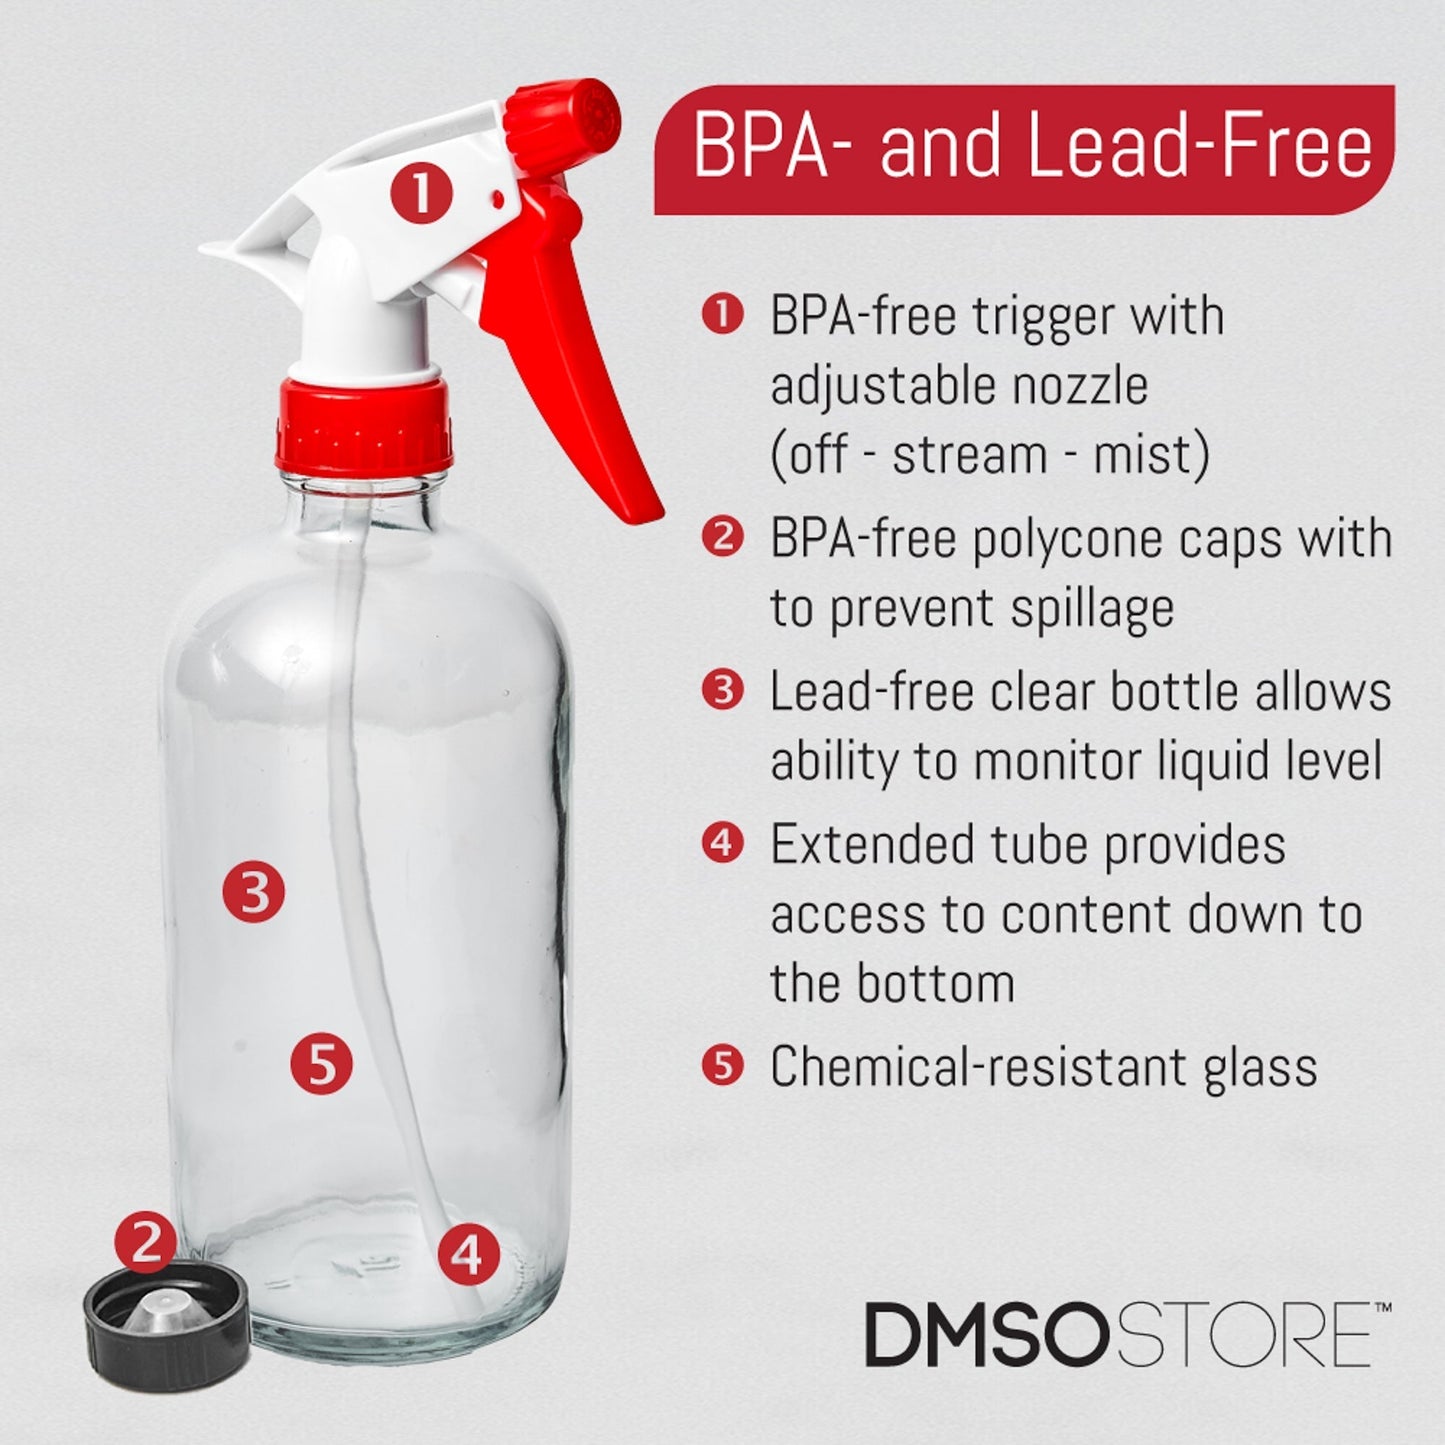 Glass Spray Bottles (8 oz.) with Red trigger sprayer 6 CT. - dmsostore